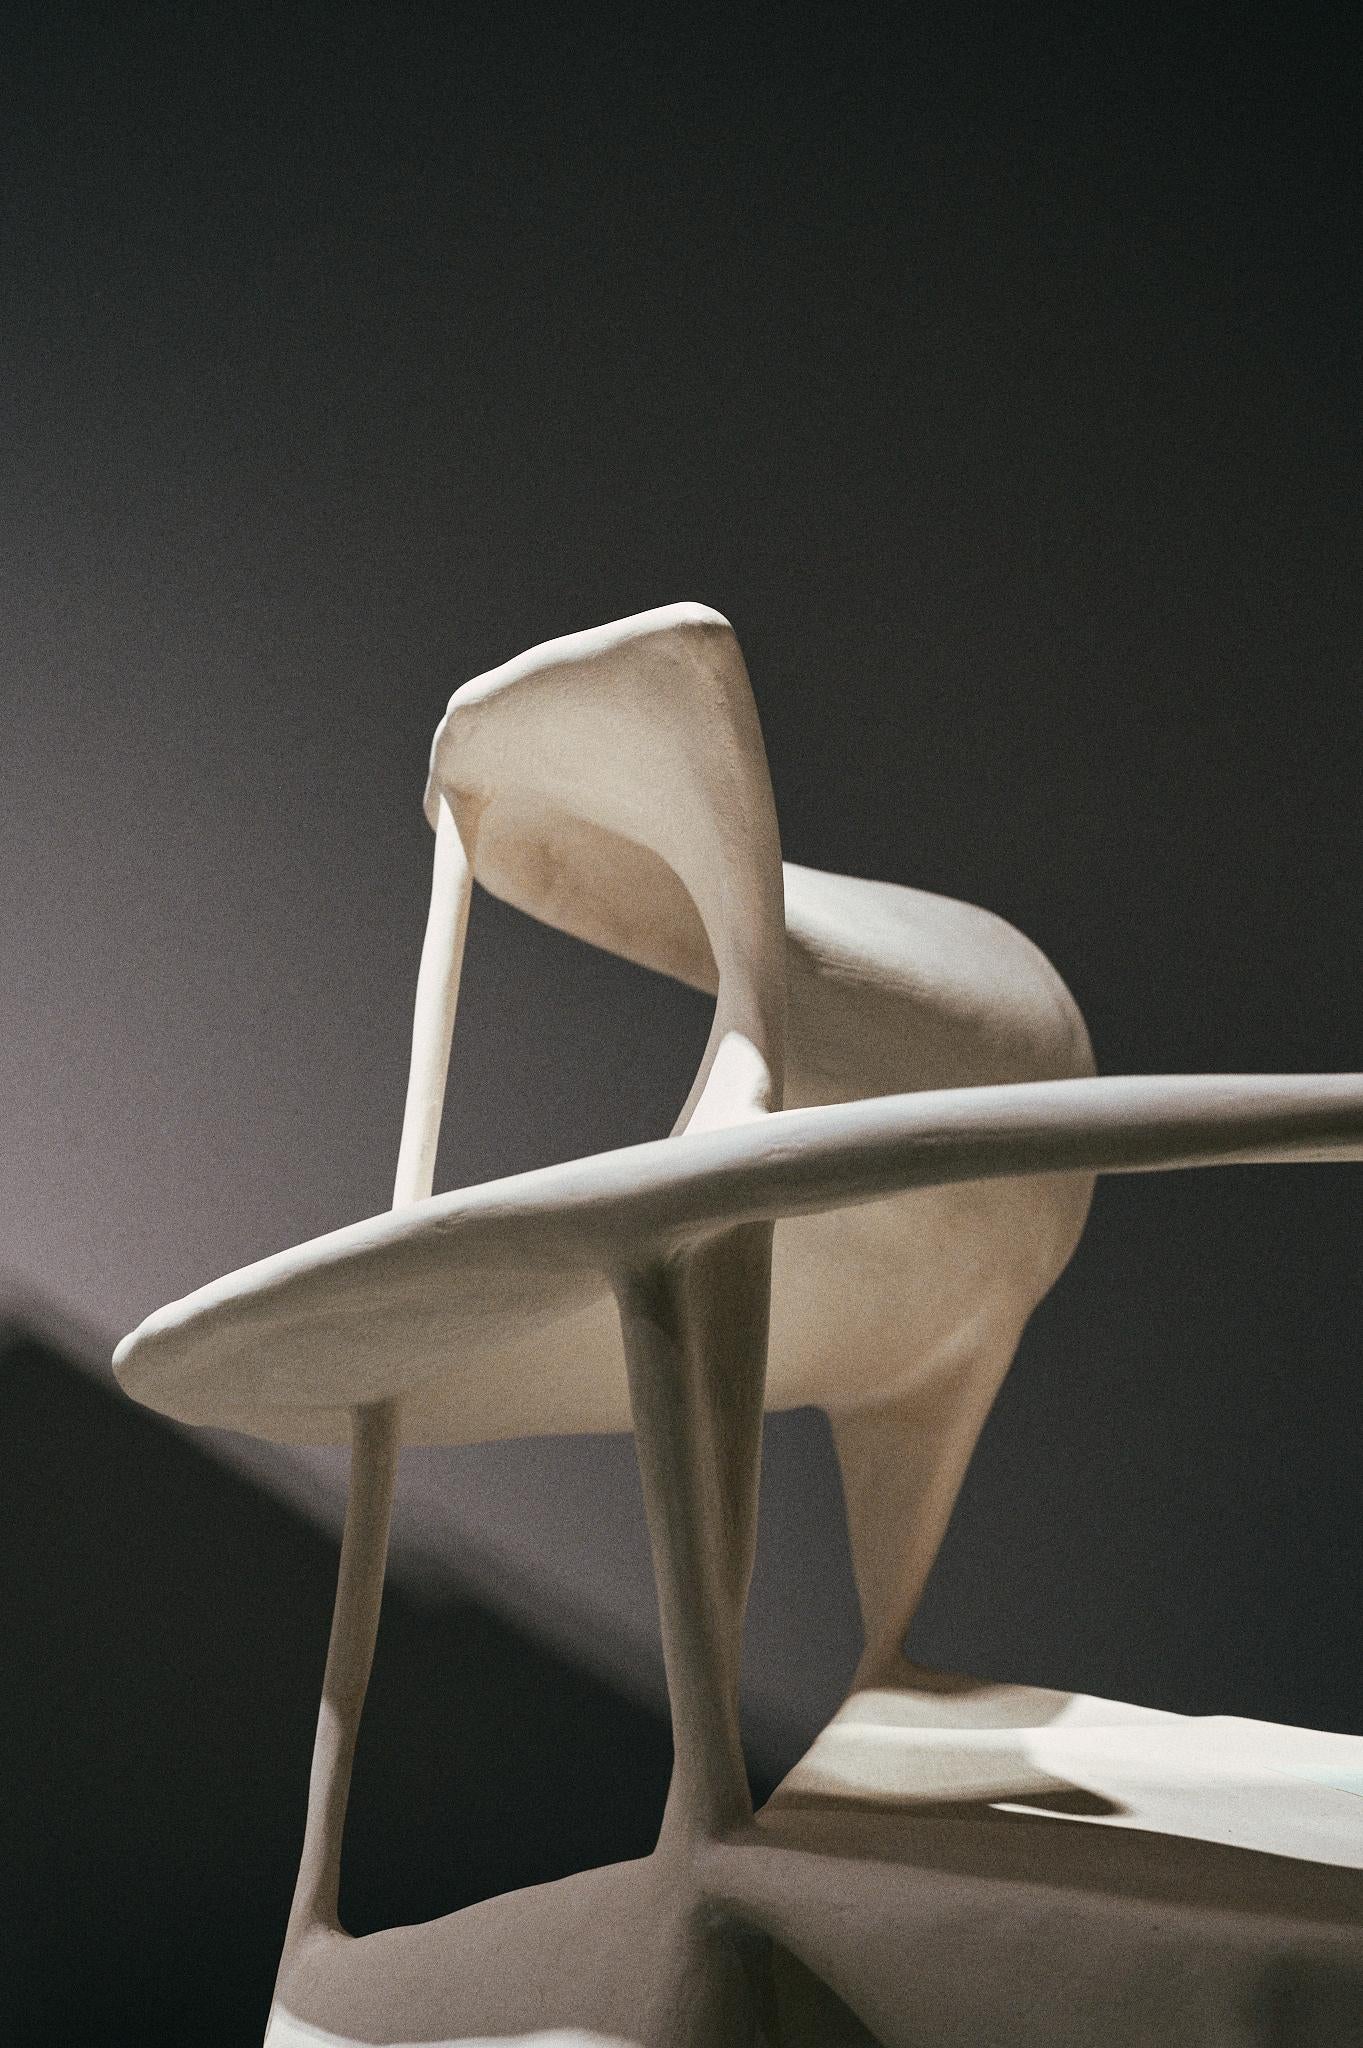 Contemporary Design White Textured Curved Sculptures Chair by Jordan van der Ven For Sale 1